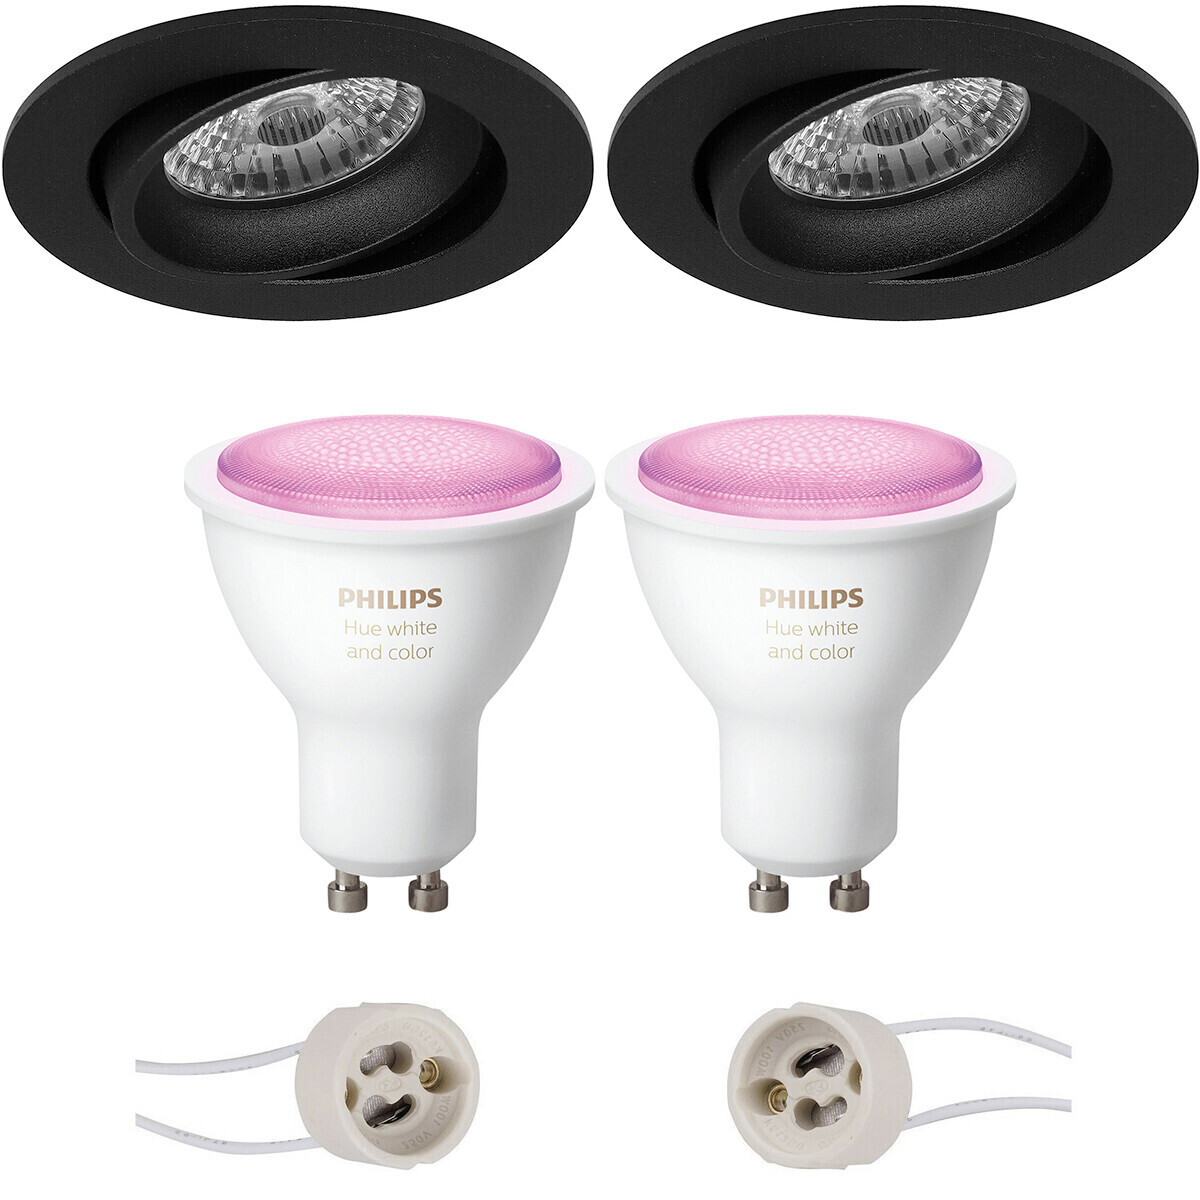 BES LED Pragmi Delton Pro - Inbouw Rond - Mat Zwart - Kantelbaar - Ø82mm - Philips Hue - LED Spot Set GU10 - White and Color Ambiance - Bluetooth